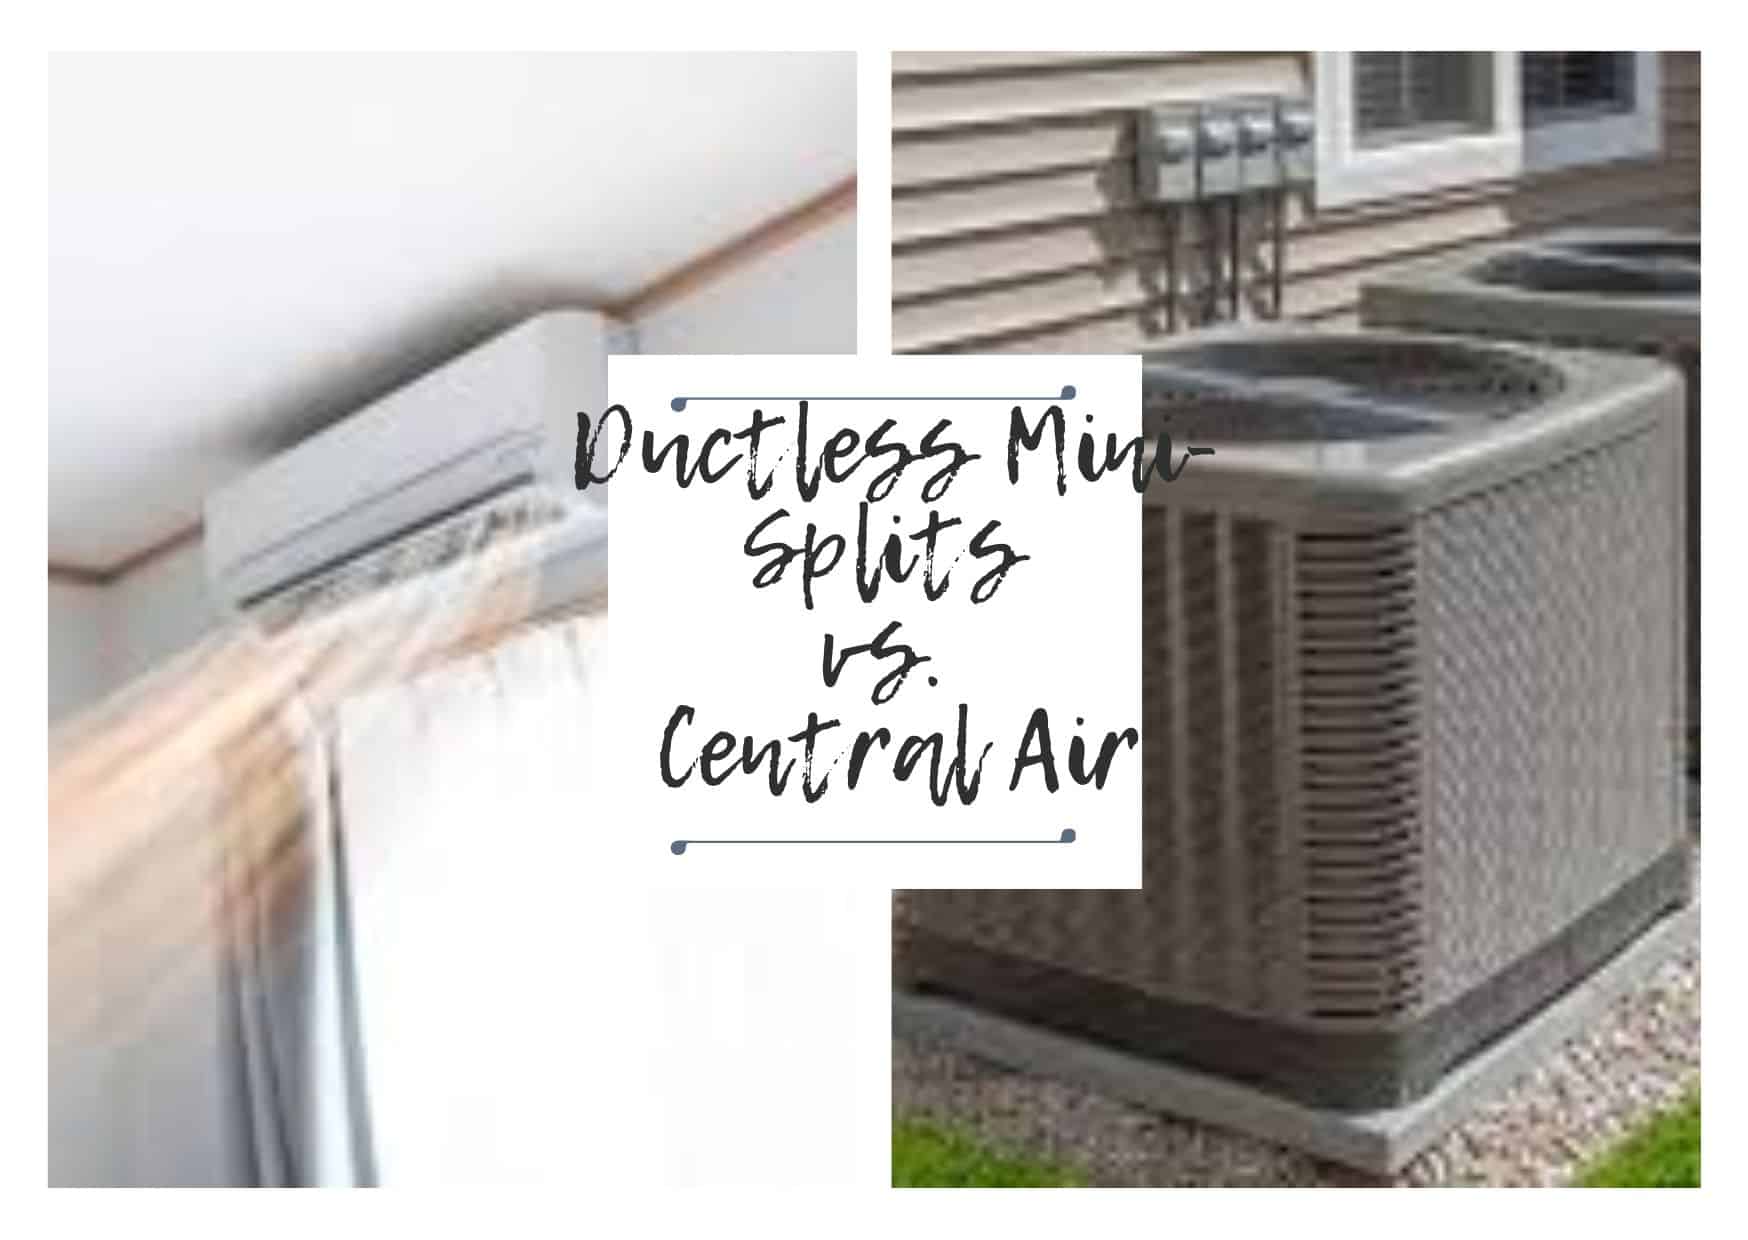 ductless mini splits vs. central air